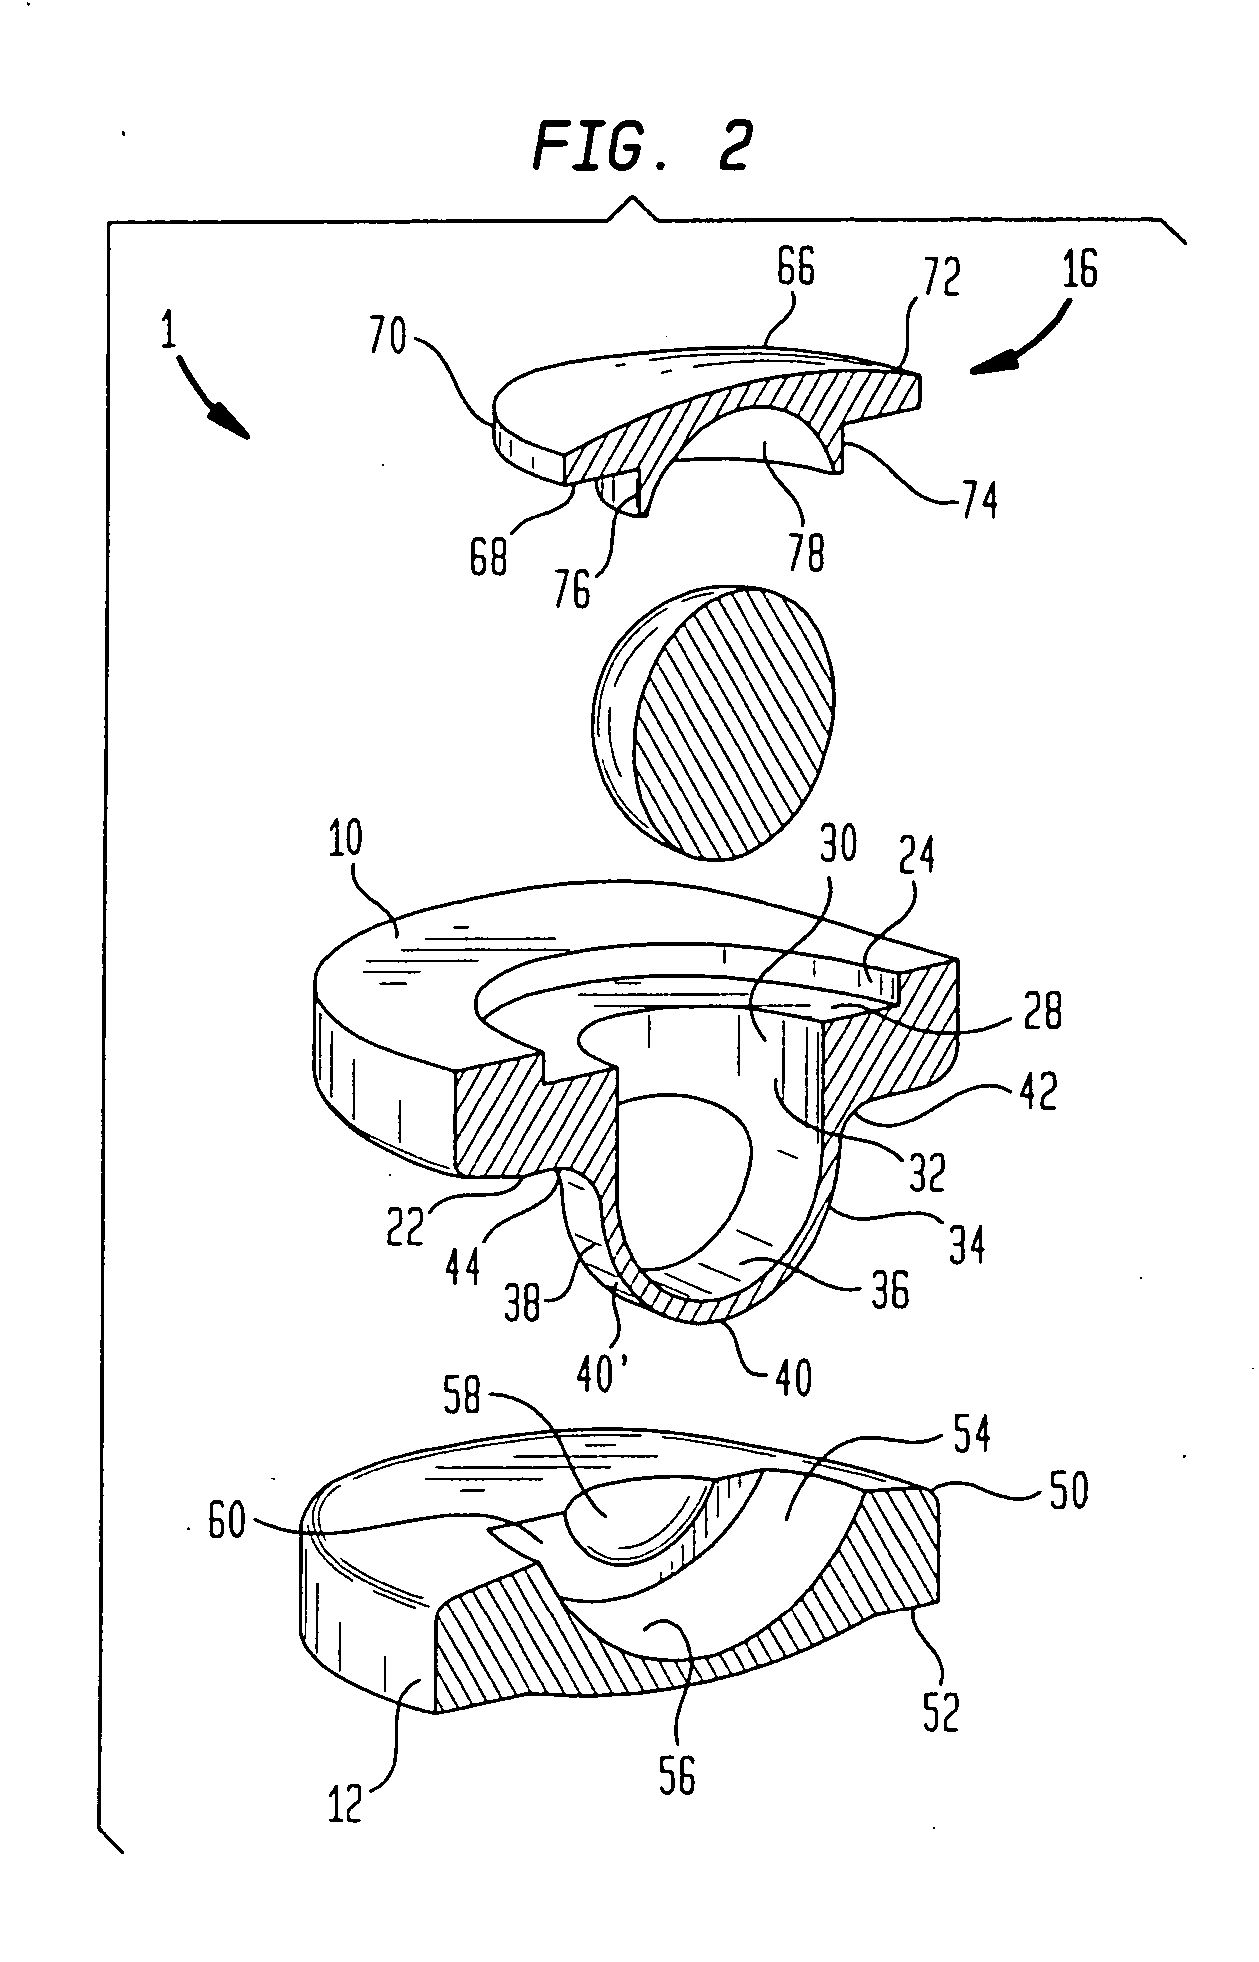 Artificial intervertebral disc having a universal joint